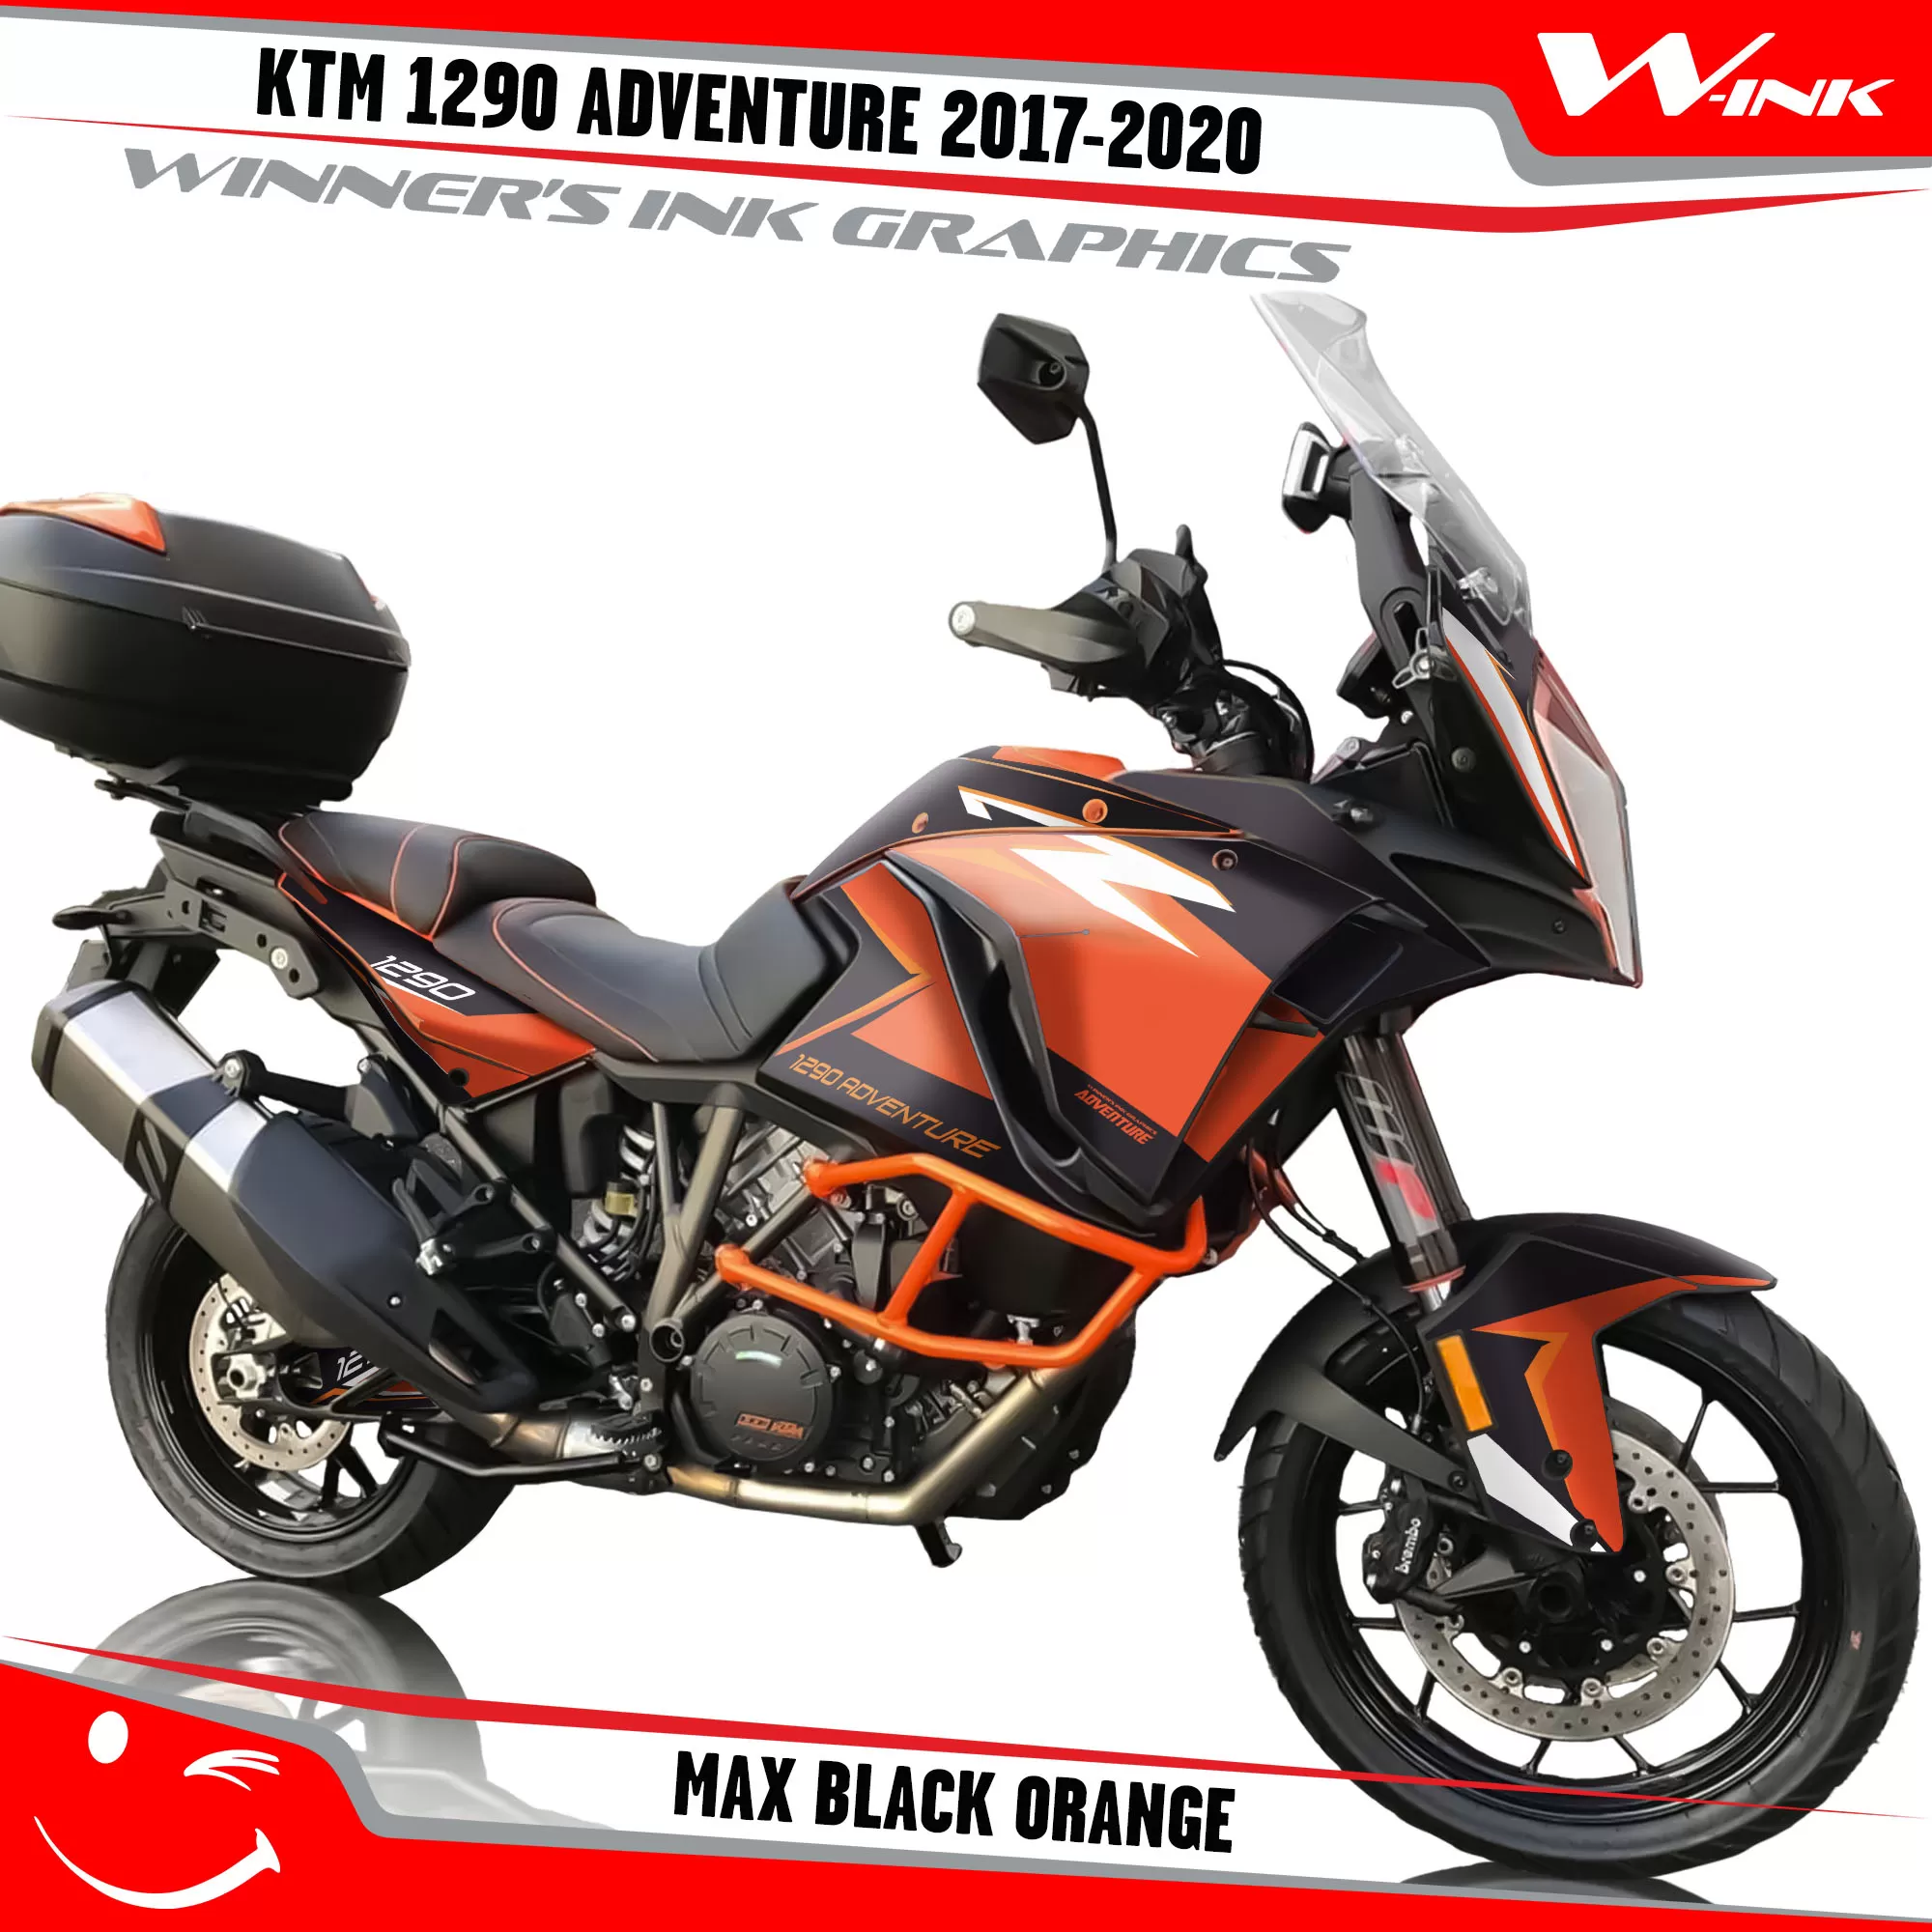 KTM-Adventure-1290-2017-2018-2019-2020-graphics-kit-and-decals-Max-Black-Orange